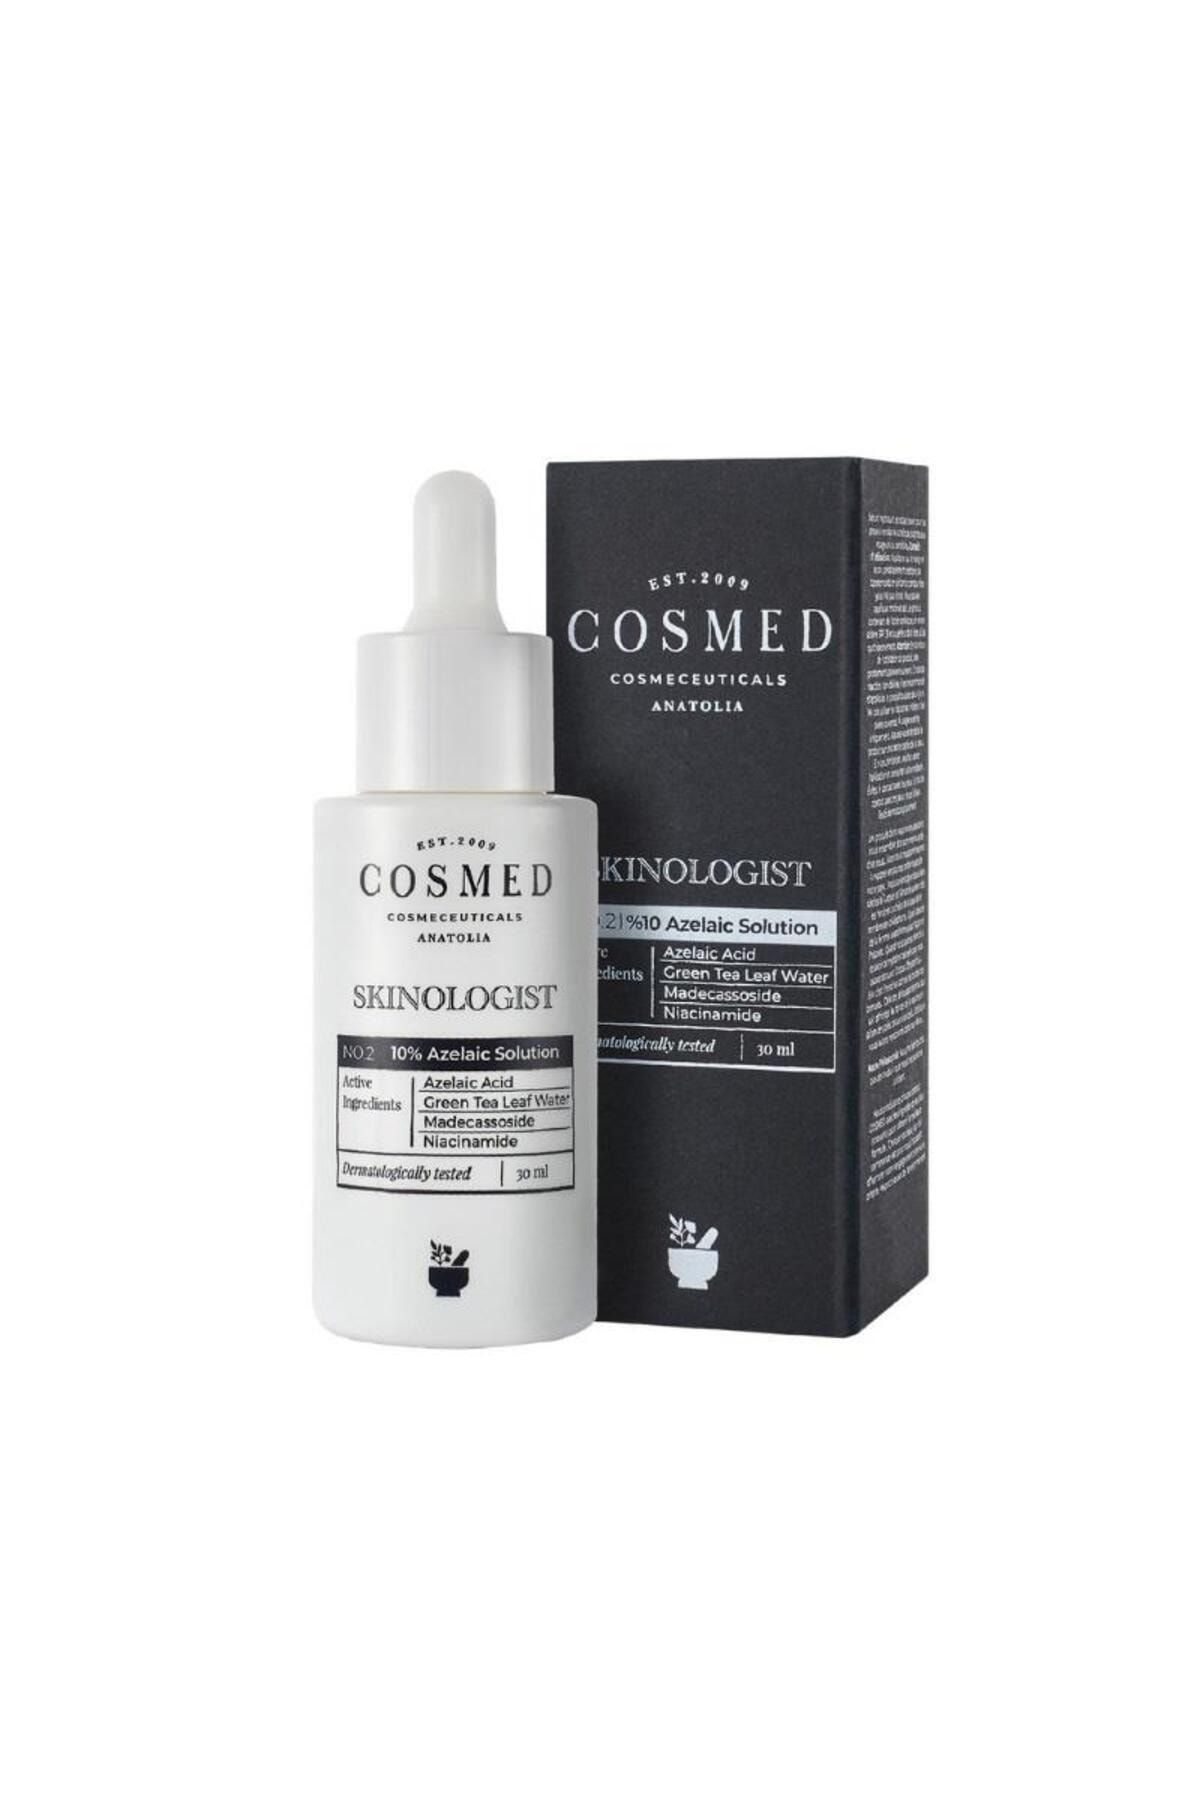 COSMED Skinologist %10 Azelaic Solution 30 ml